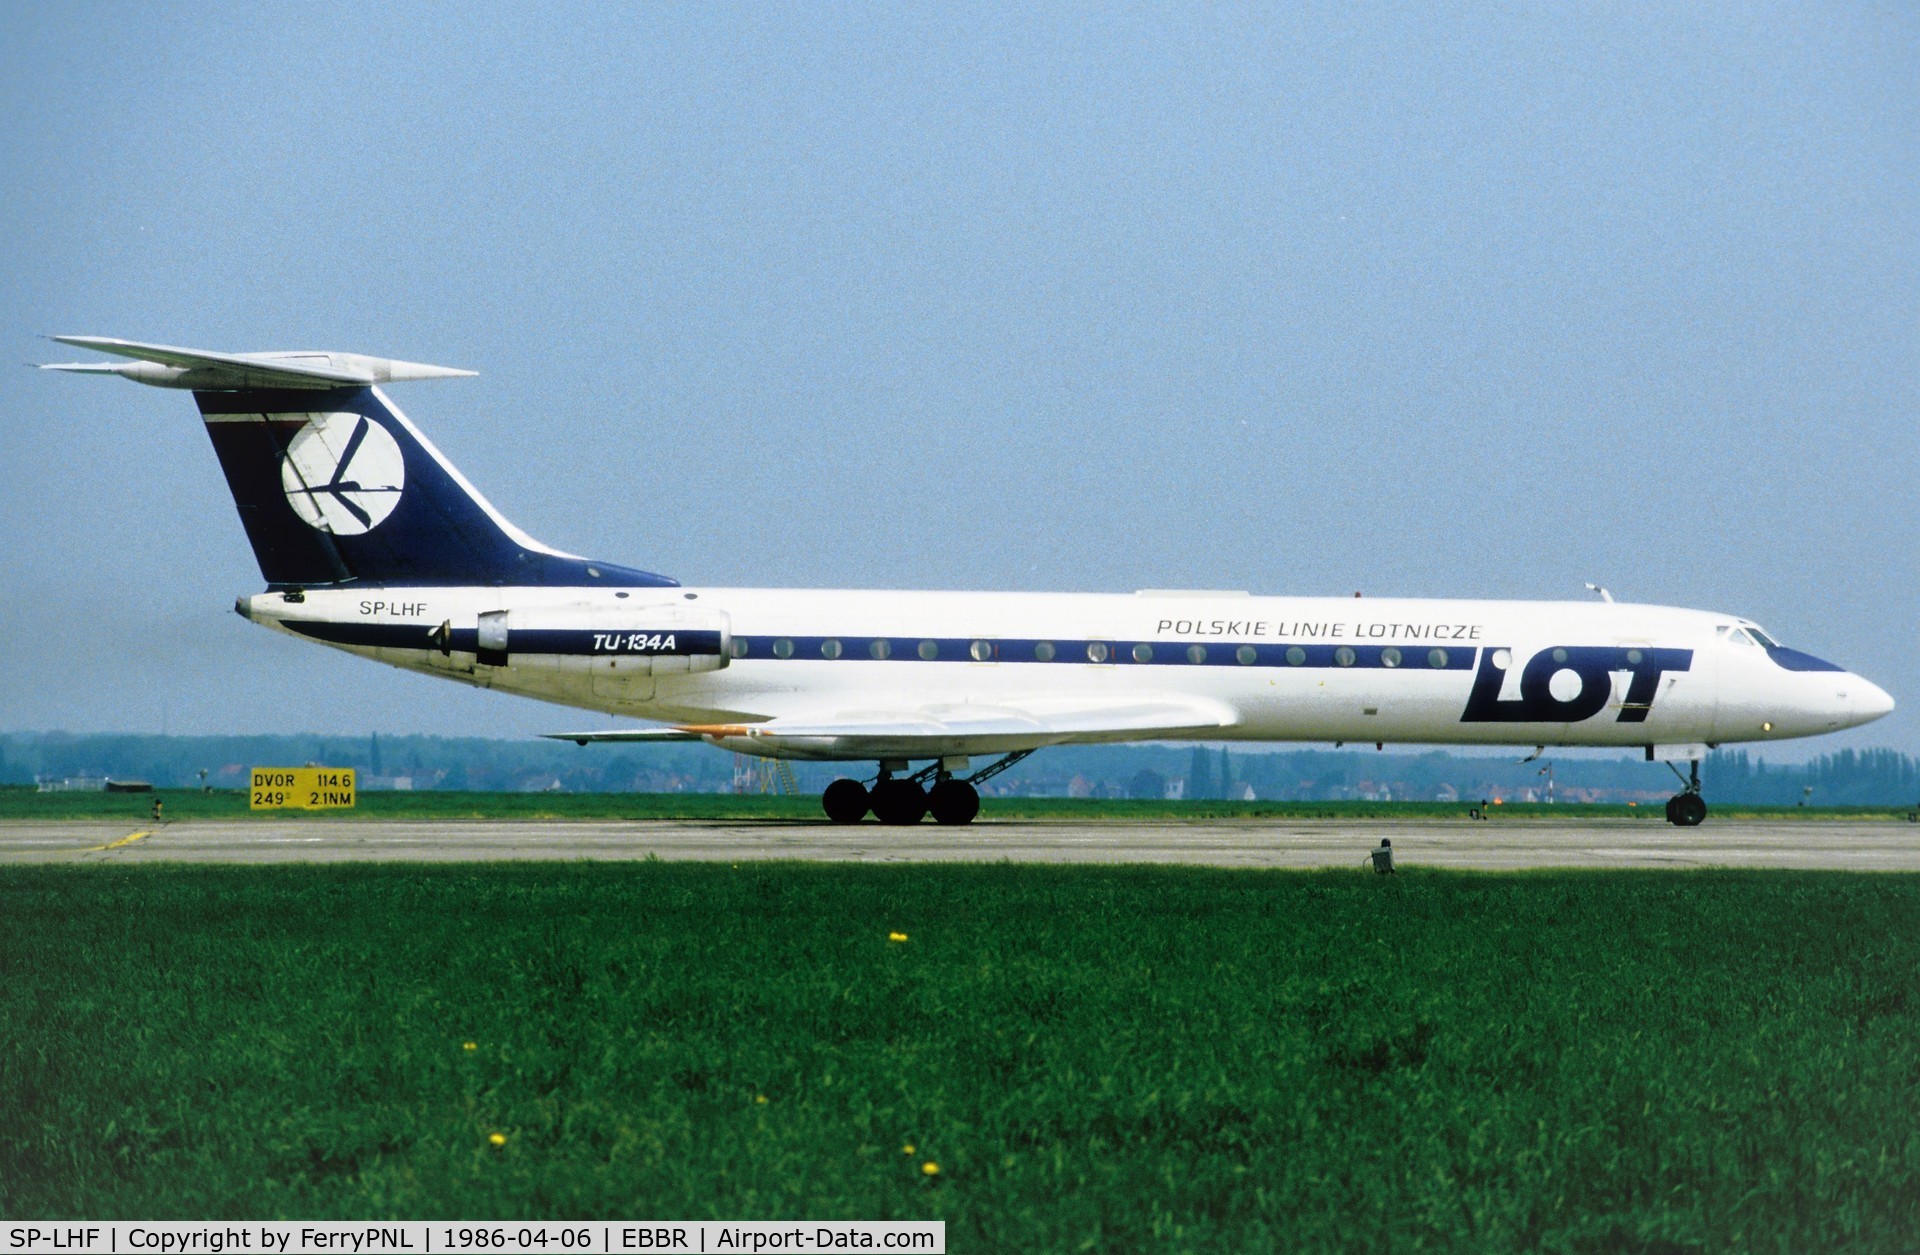 SP-LHF, 1973 Tupolev Tu-134A C/N 3352005, LOT Tu134 about to line-up